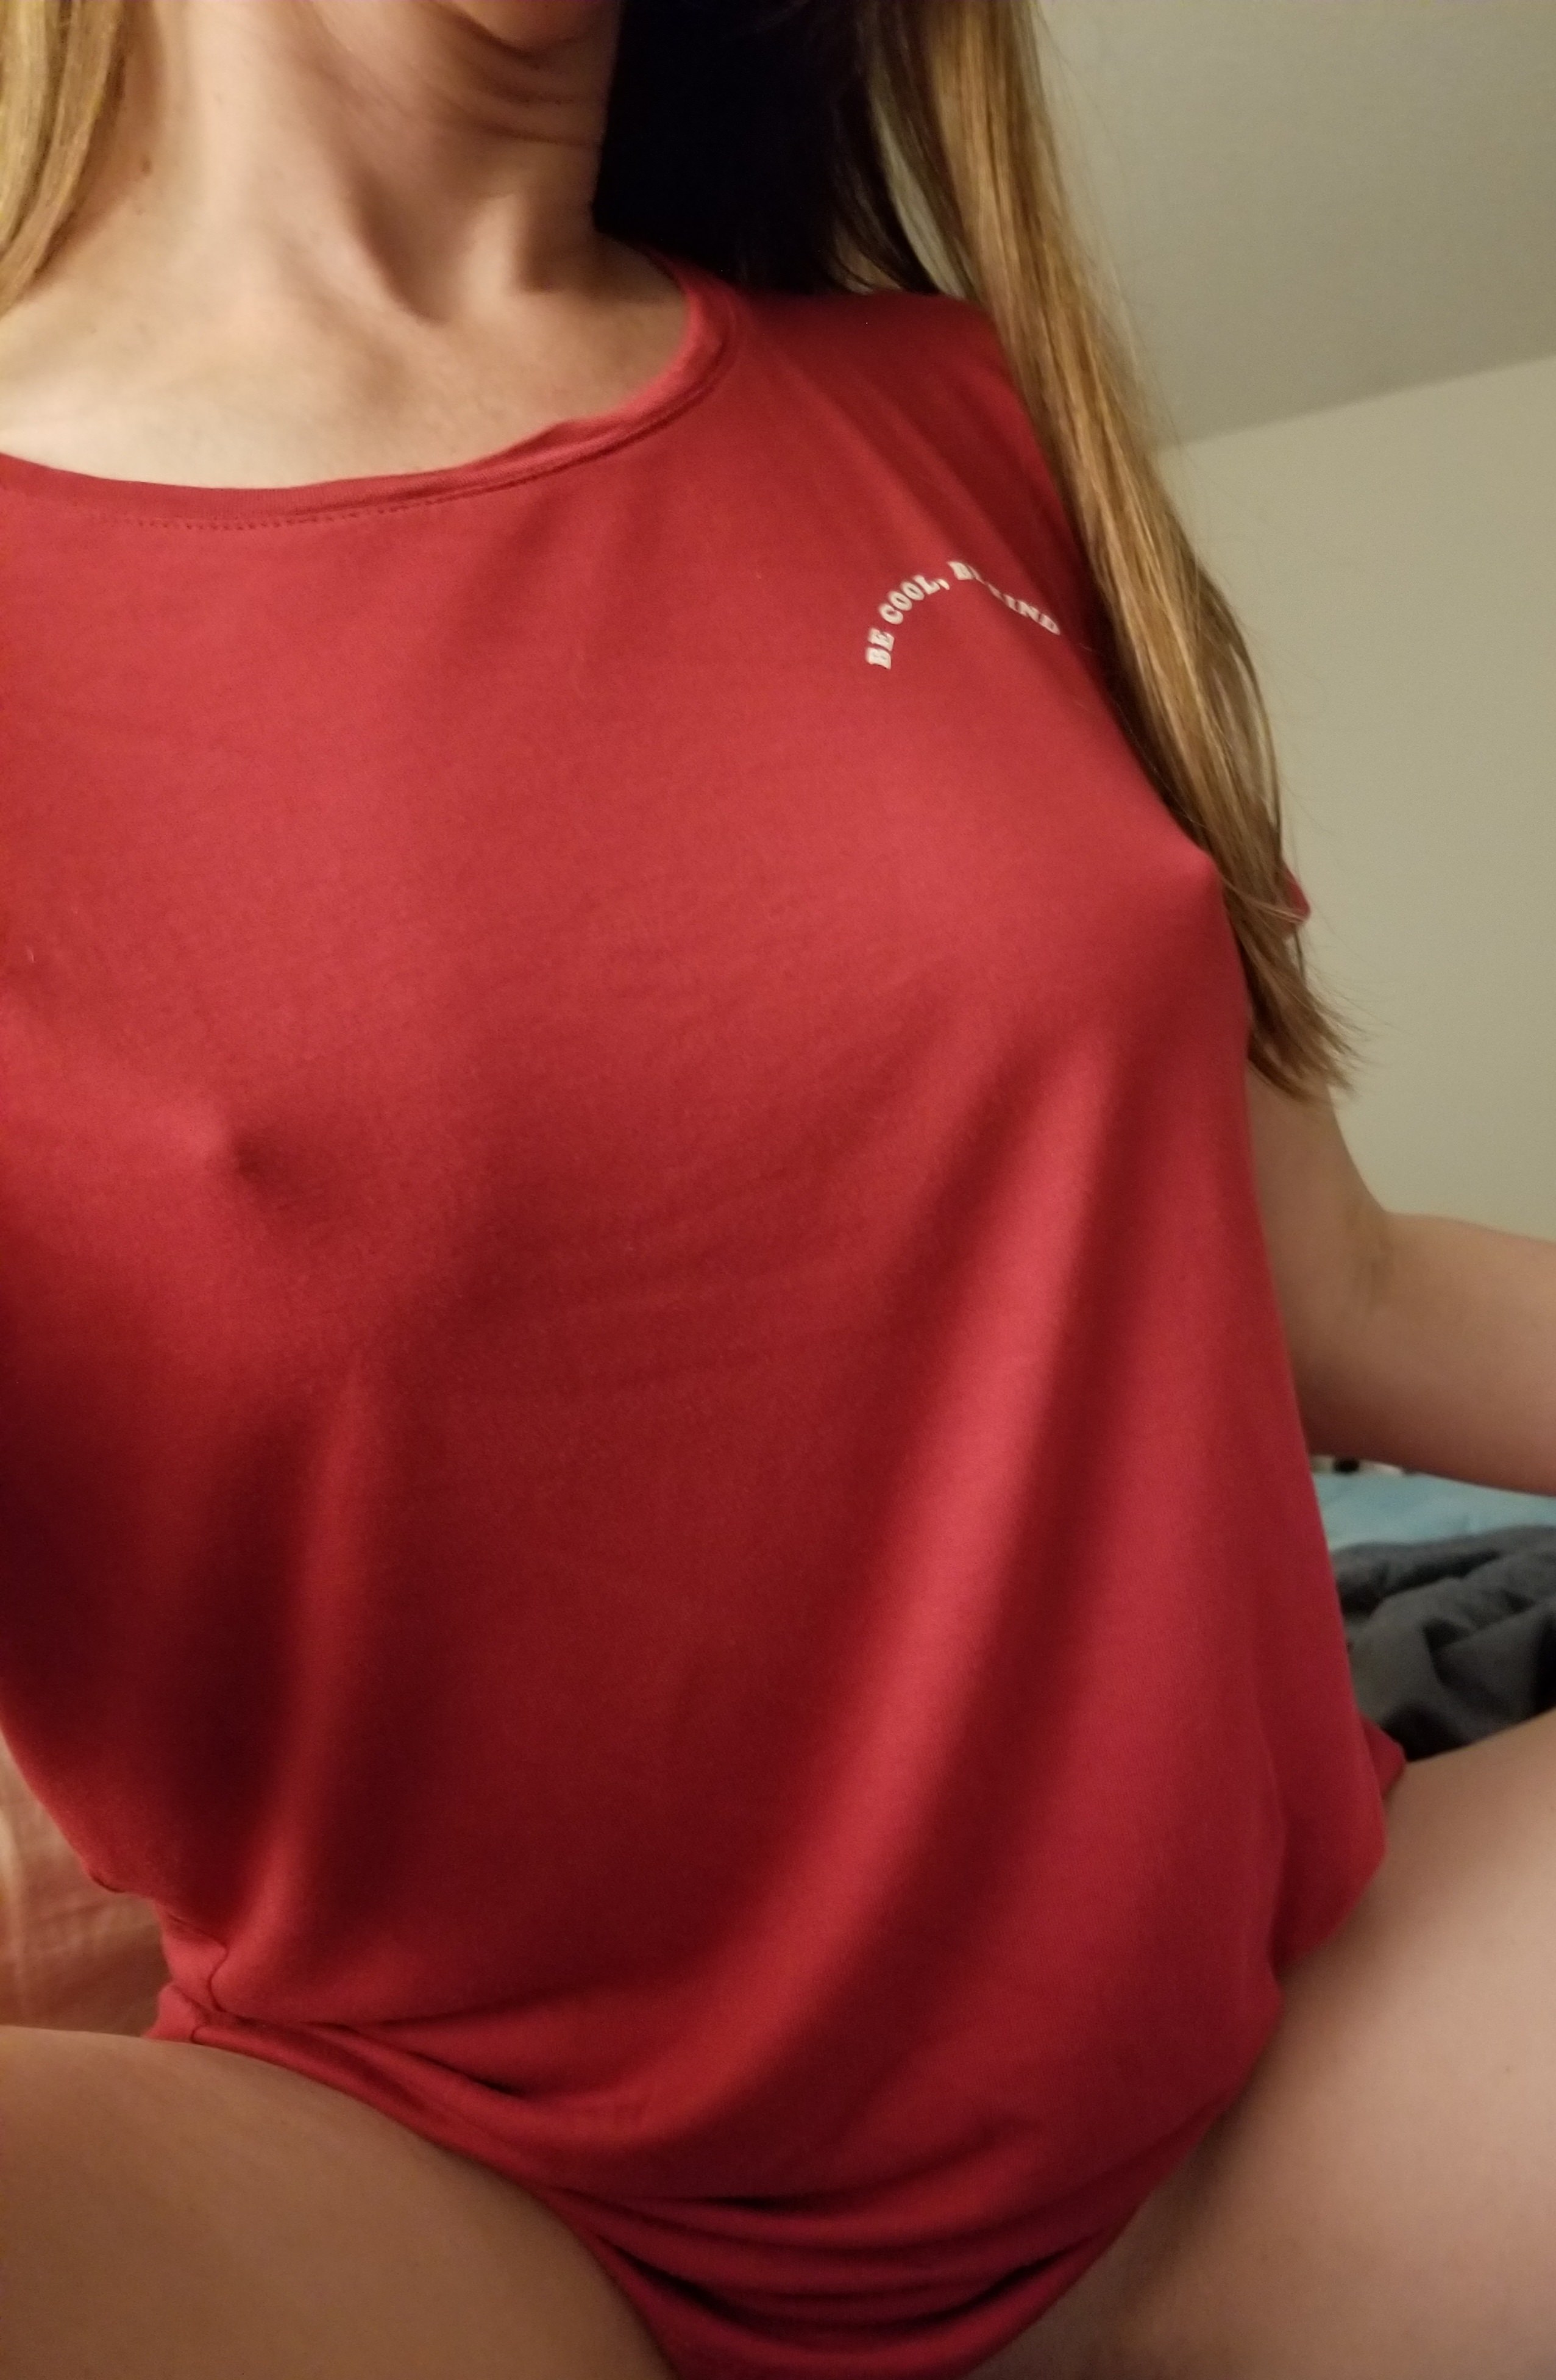 My Perky Nipples - I love feeling my hard nipples. Porn Pic - EPORNER